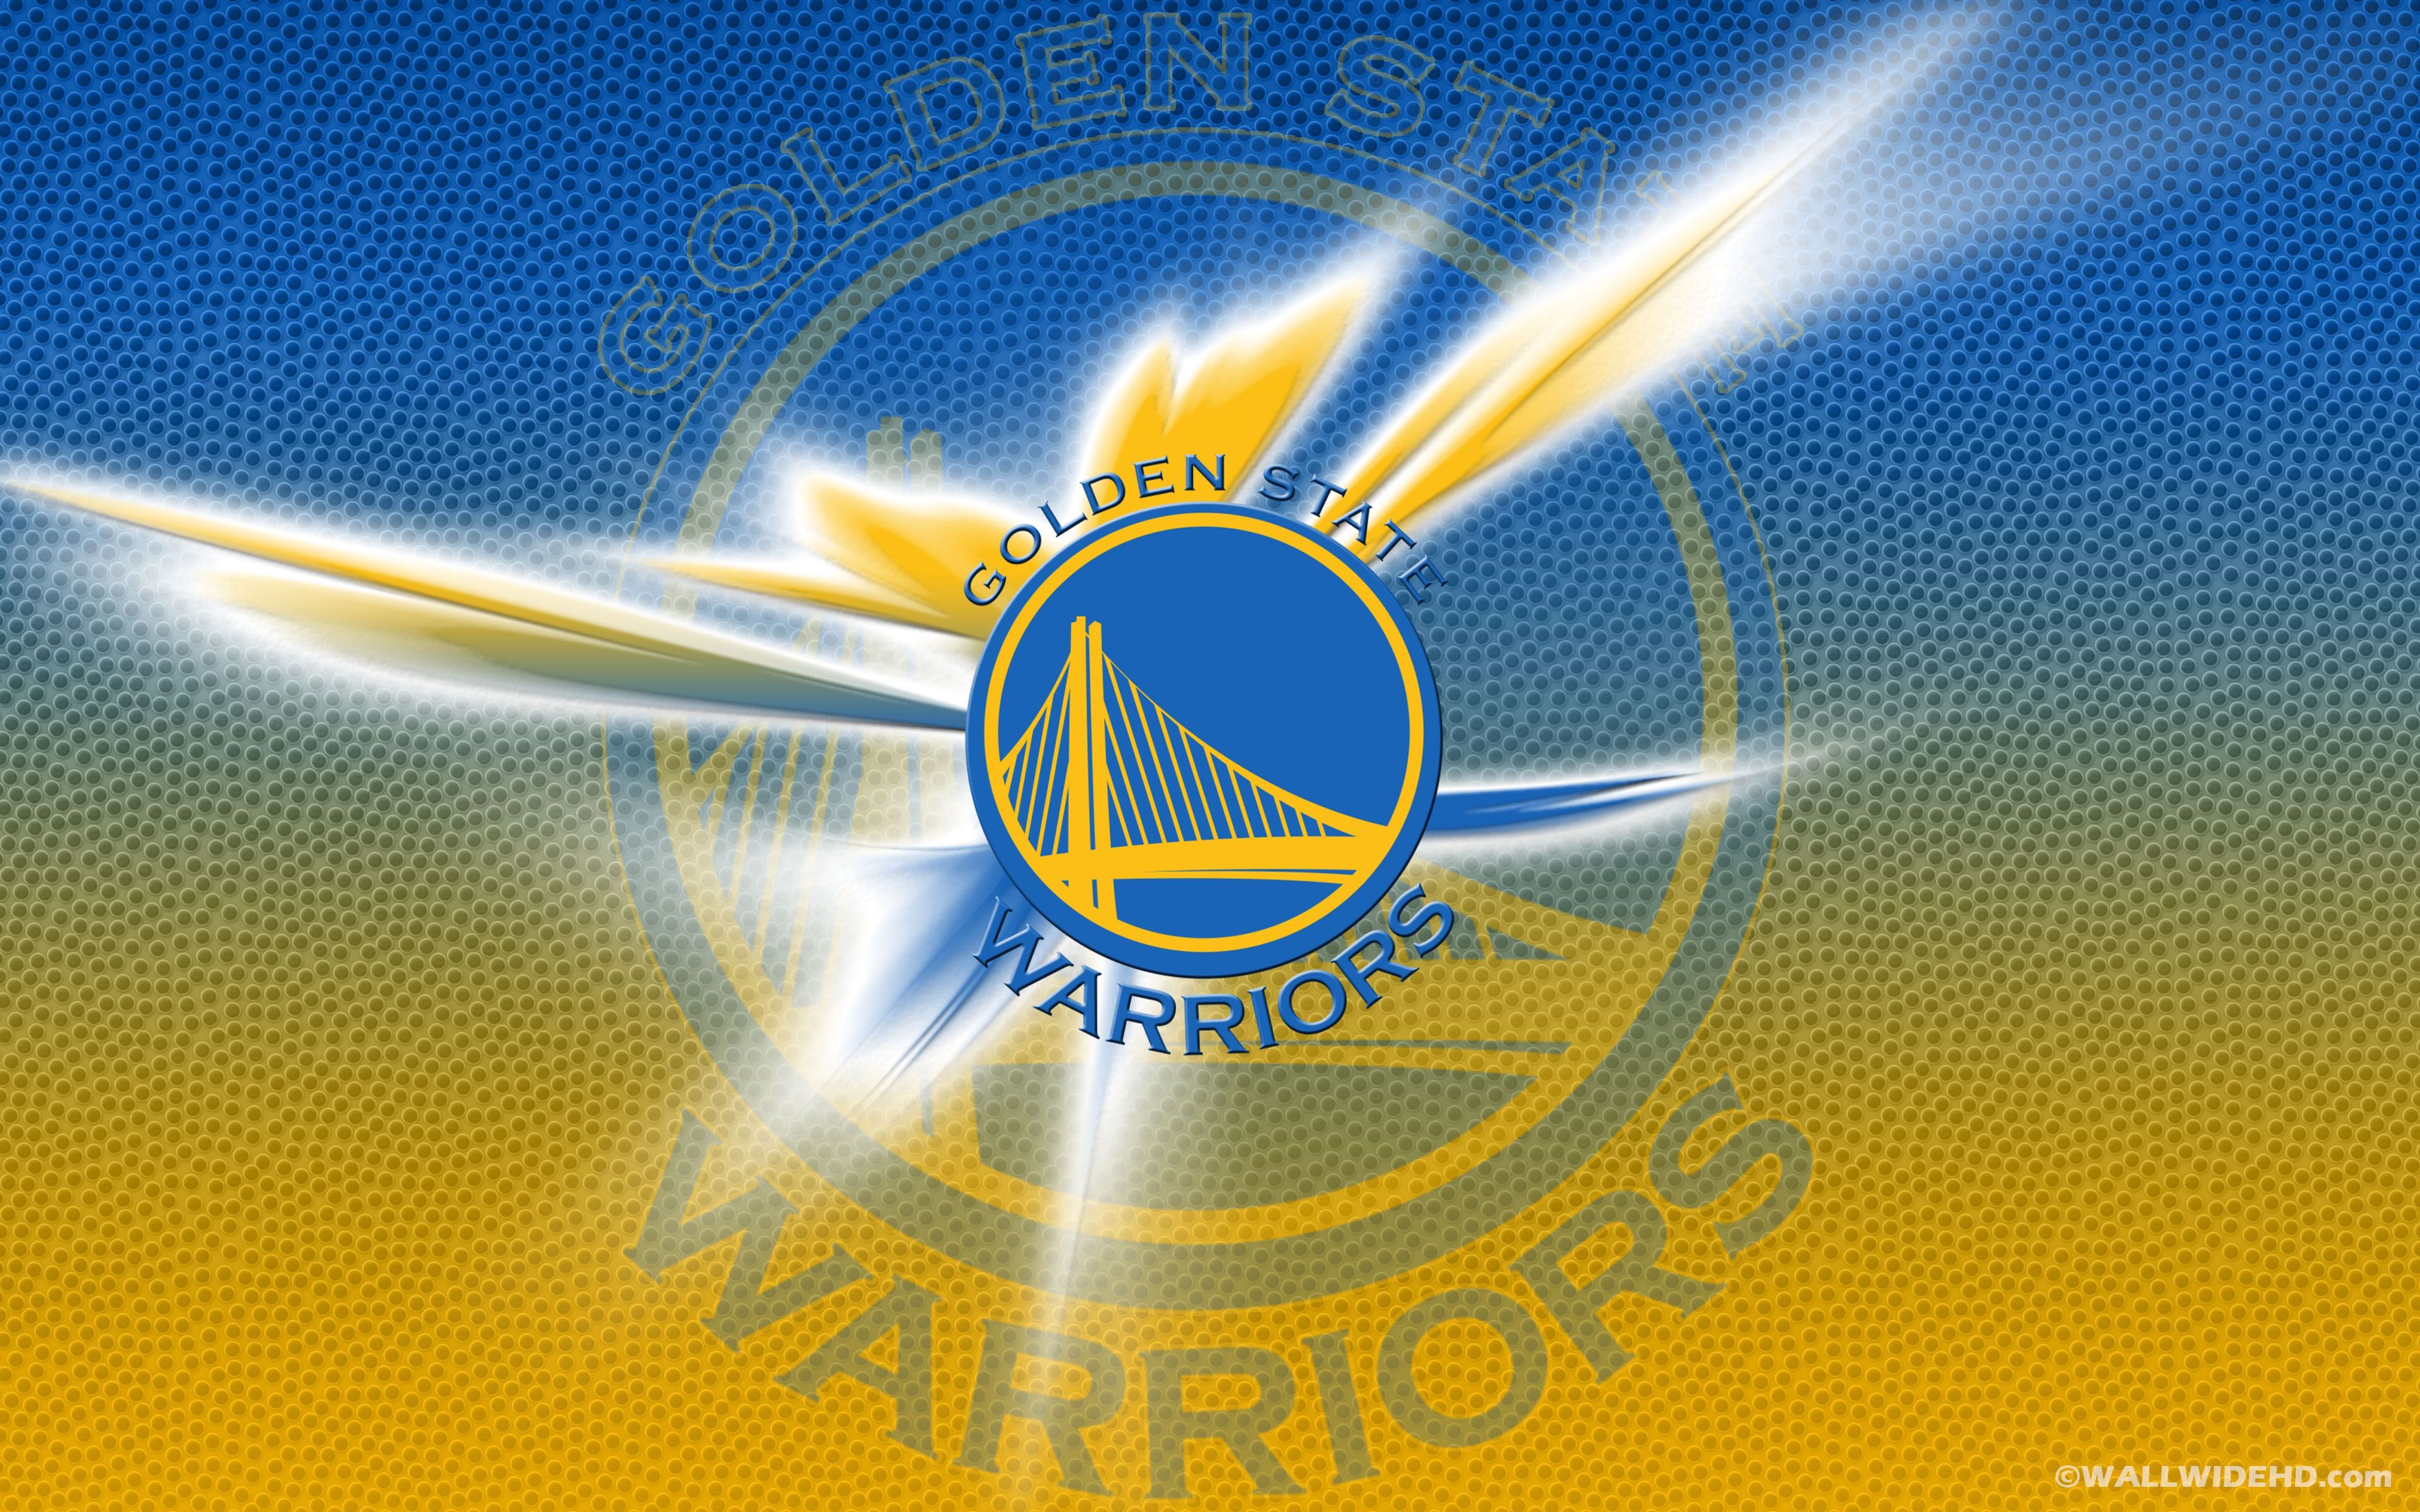 Golden State Warriors Image Wallpaper HD. Warrior image